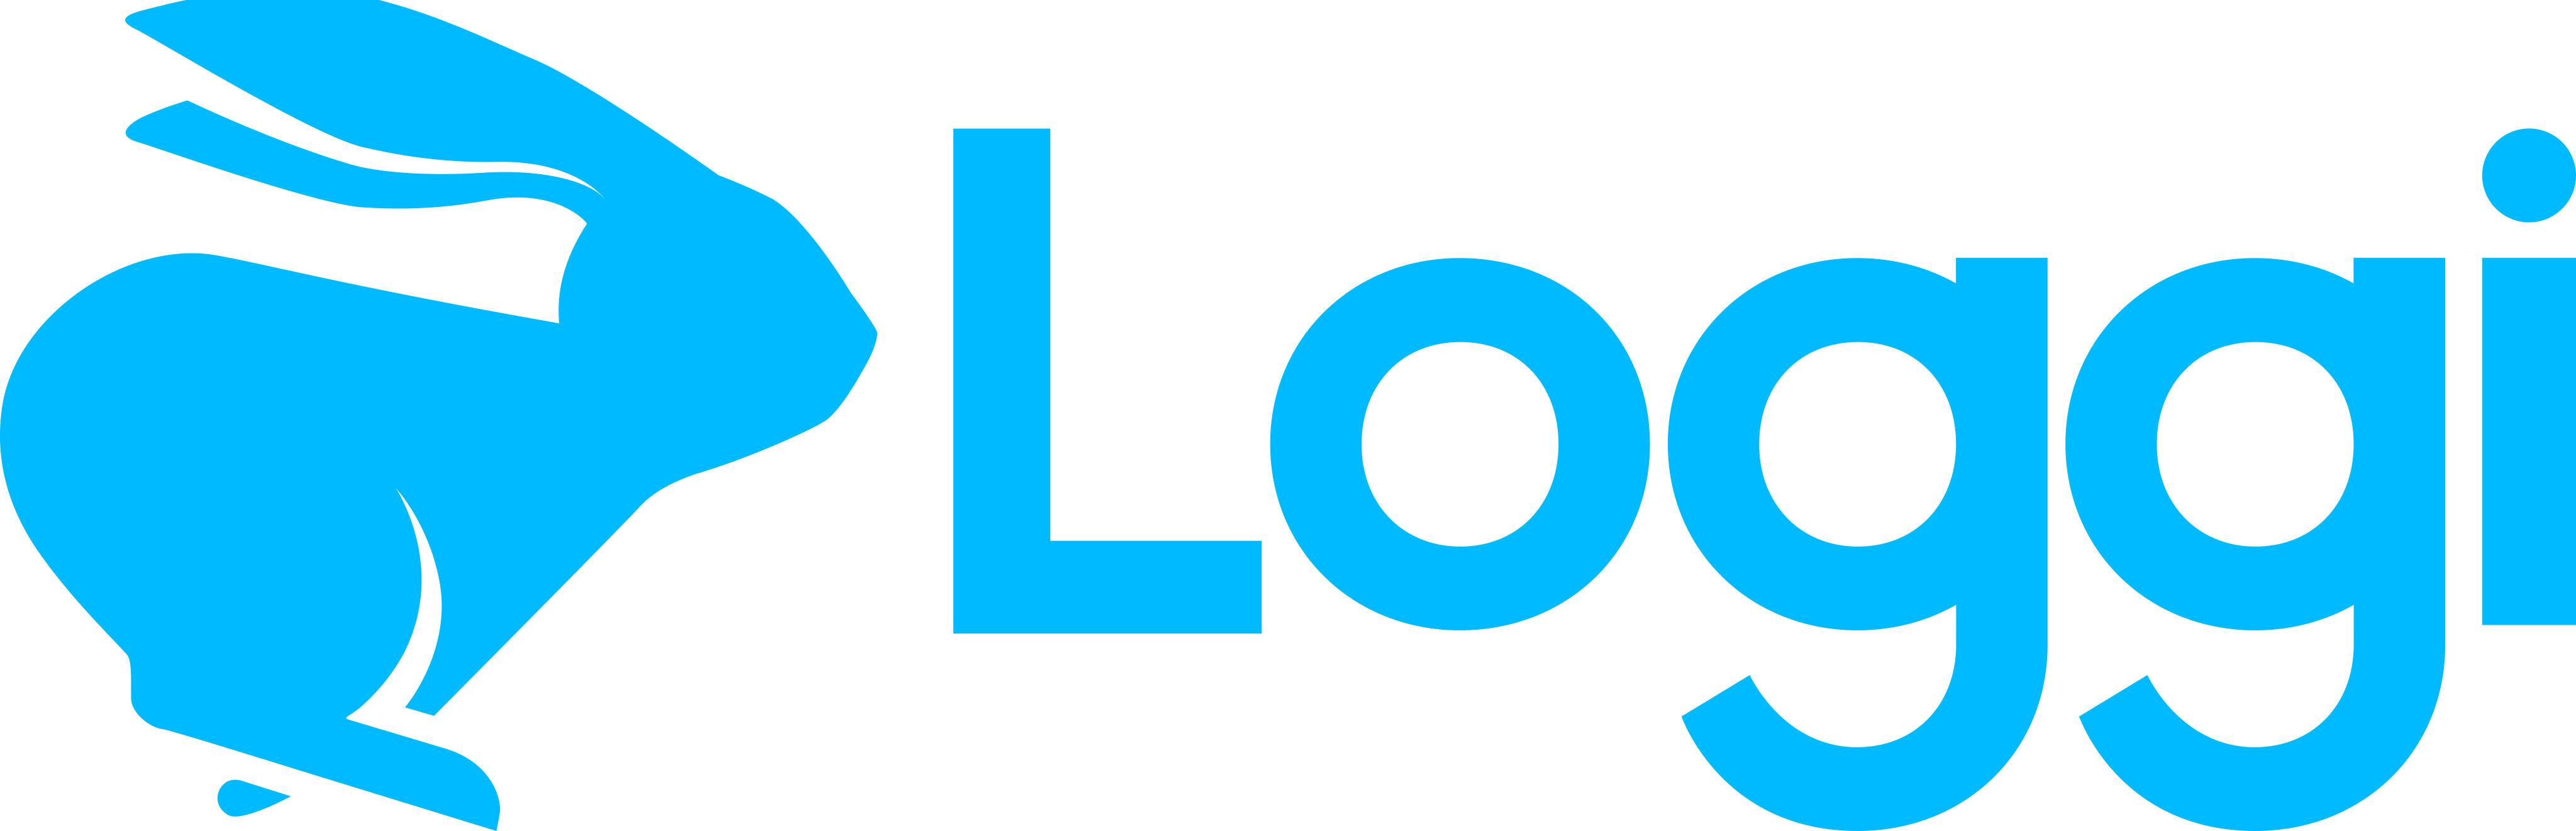 loggi logo